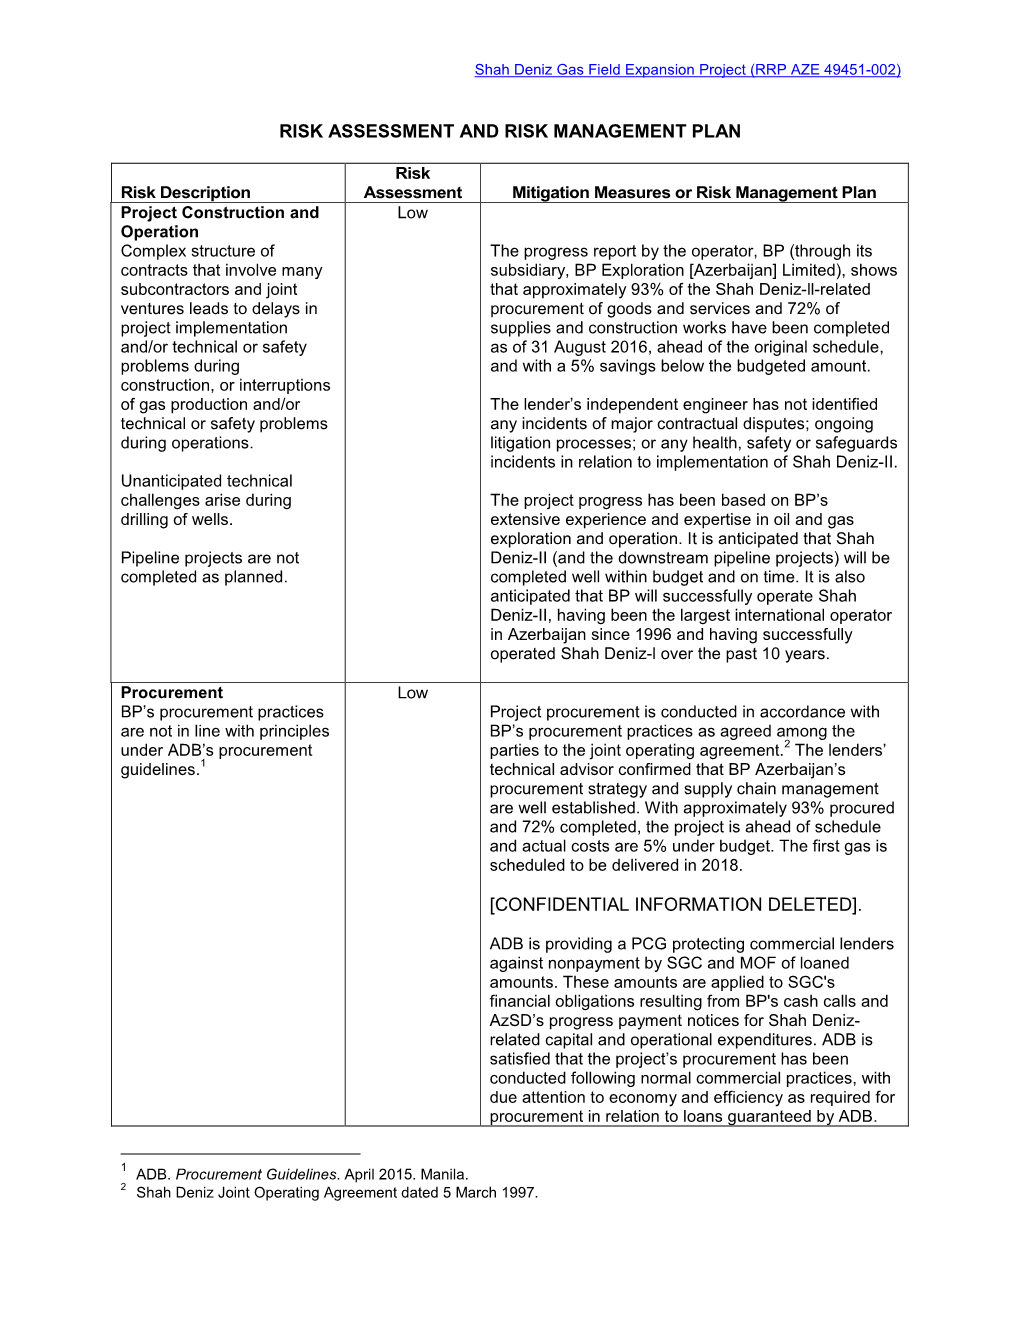 RRP Risk Assessment and Risk Management Plan